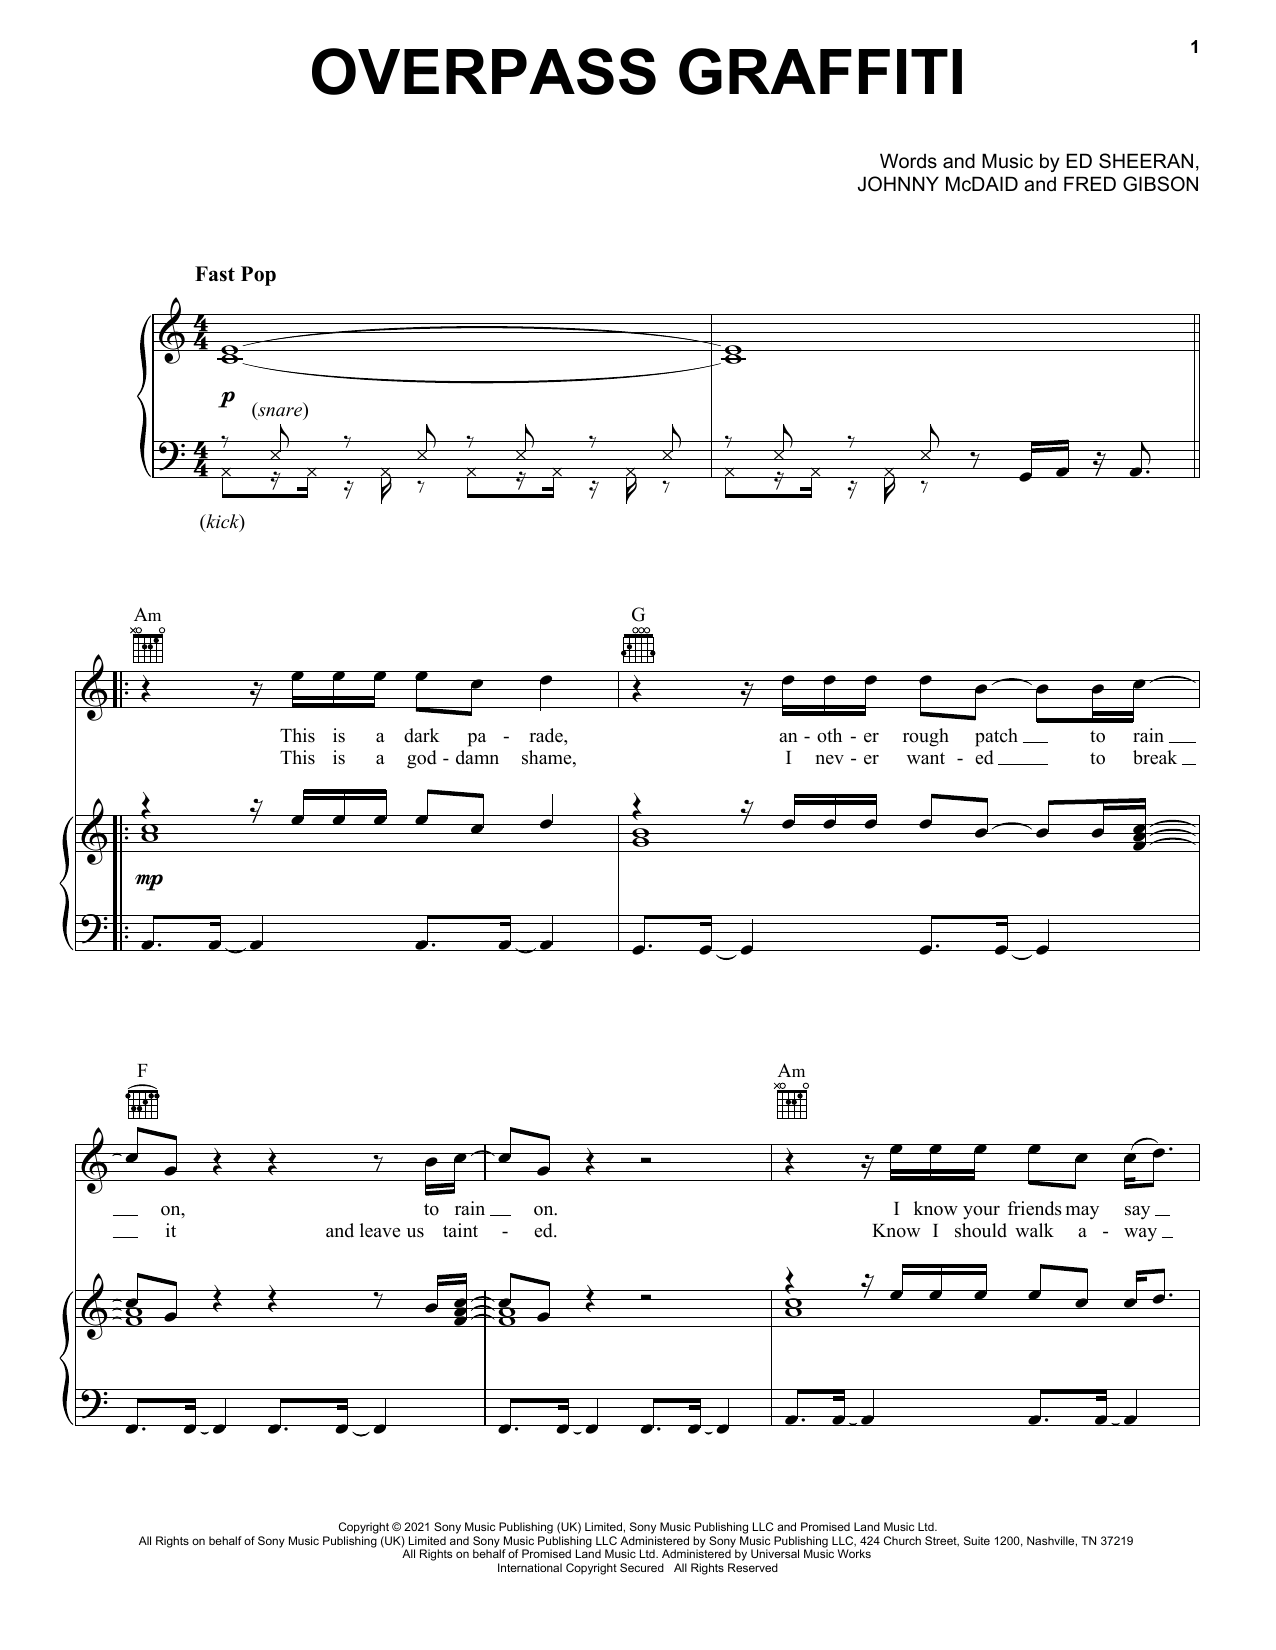 Ed Sheeran Overpass Graffiti Sheet Music Notes & Chords for Piano, Vocal & Guitar (Right-Hand Melody) - Download or Print PDF